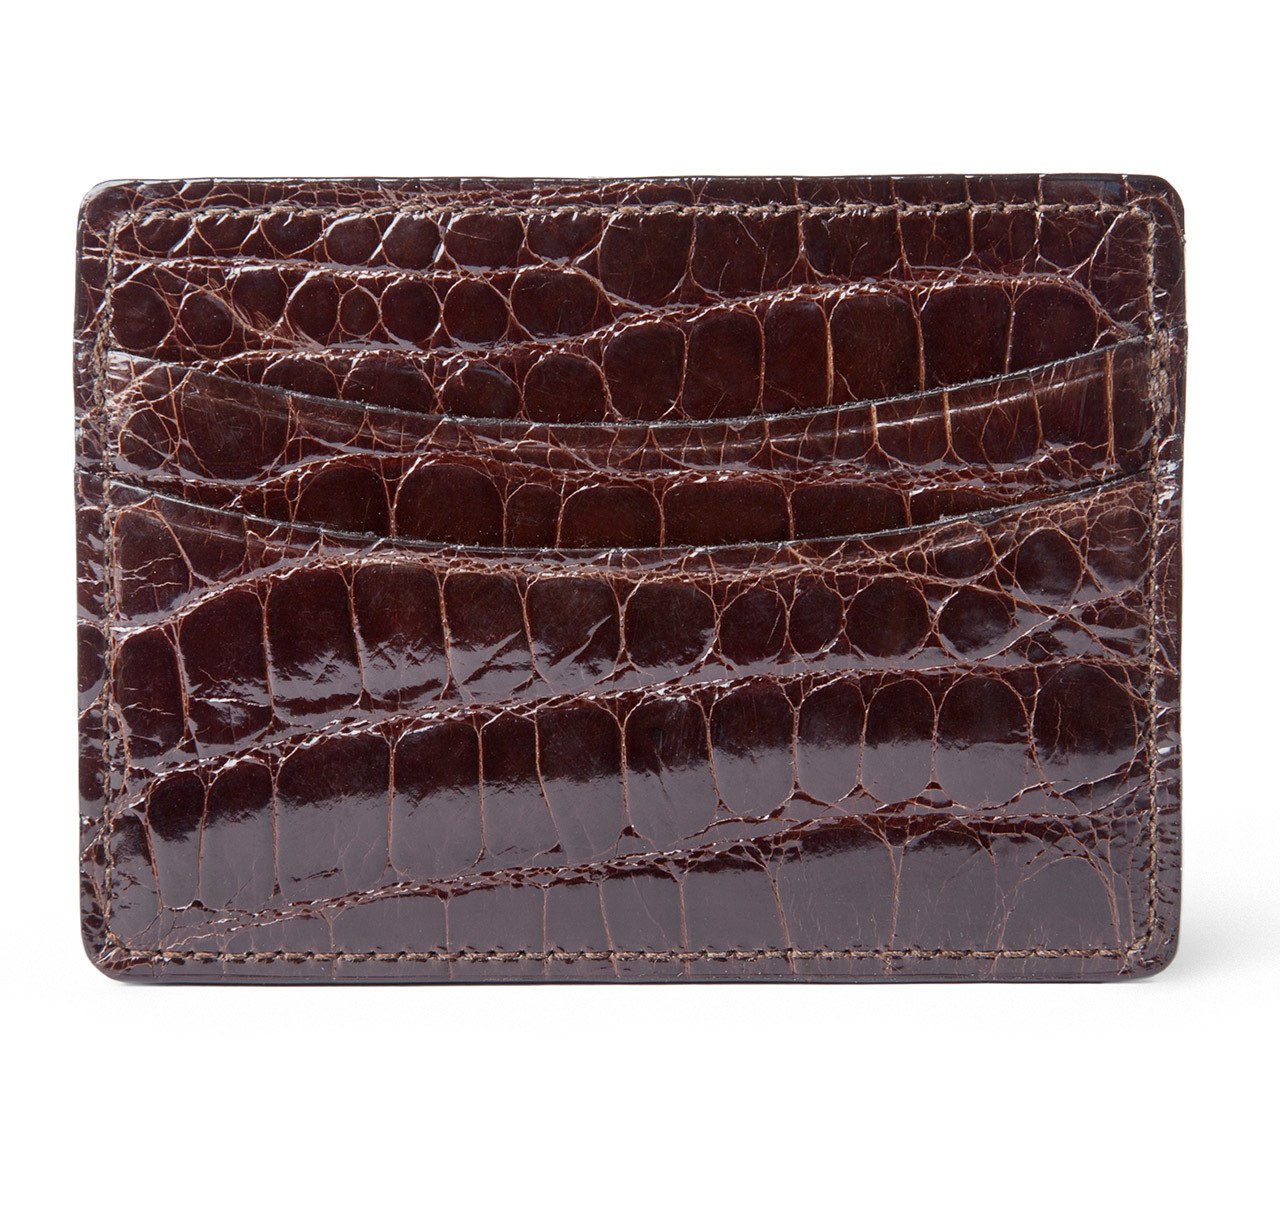 Glazed Chocolate Brown Alligator Card Holder